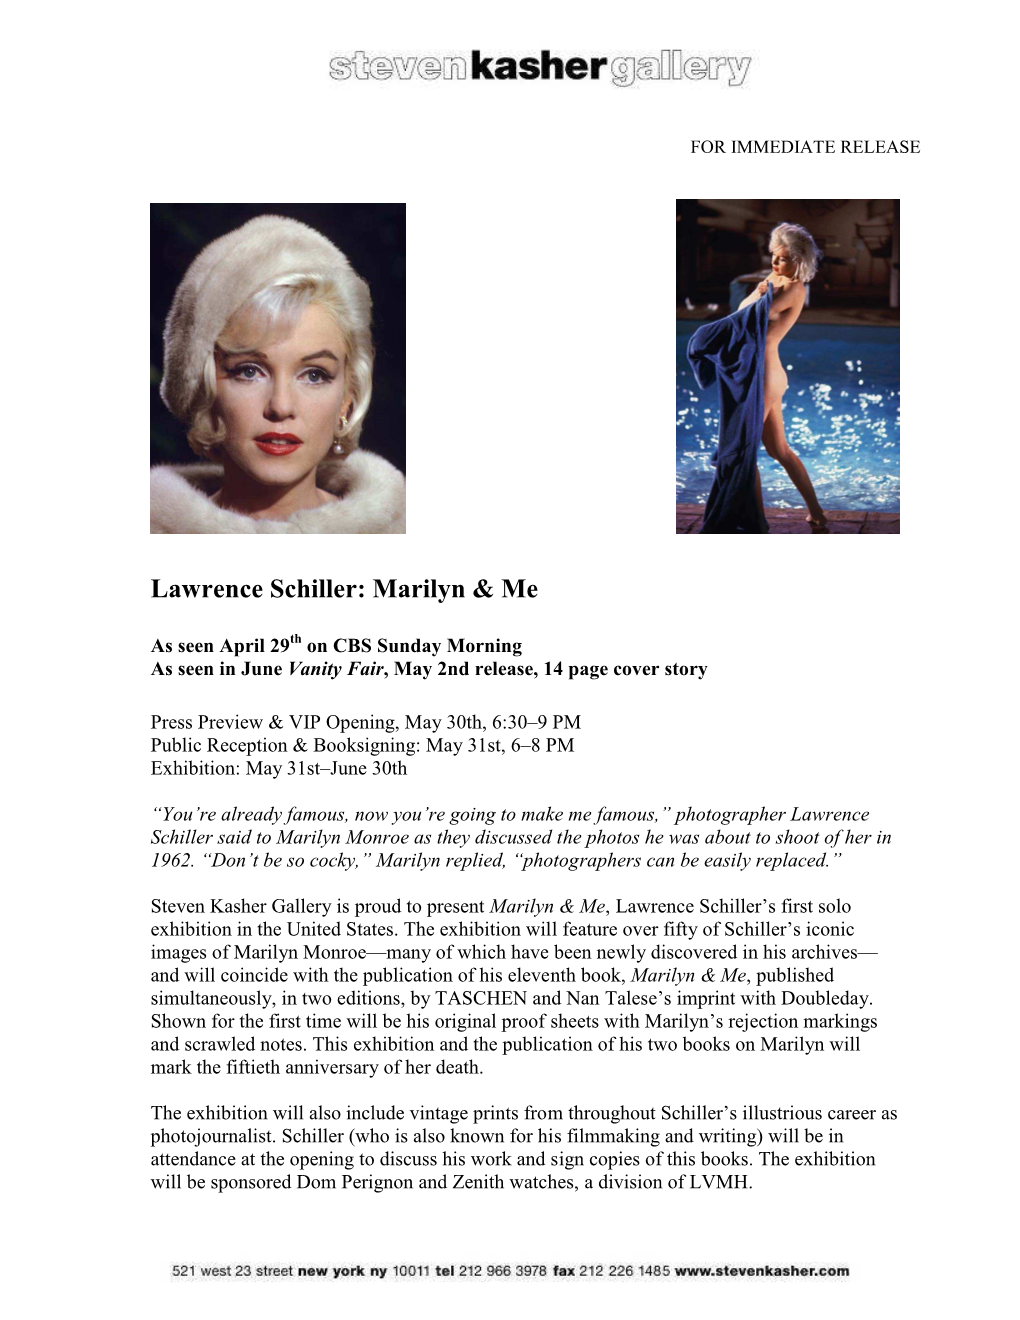 Lawrence Schiller: Marilyn & Me